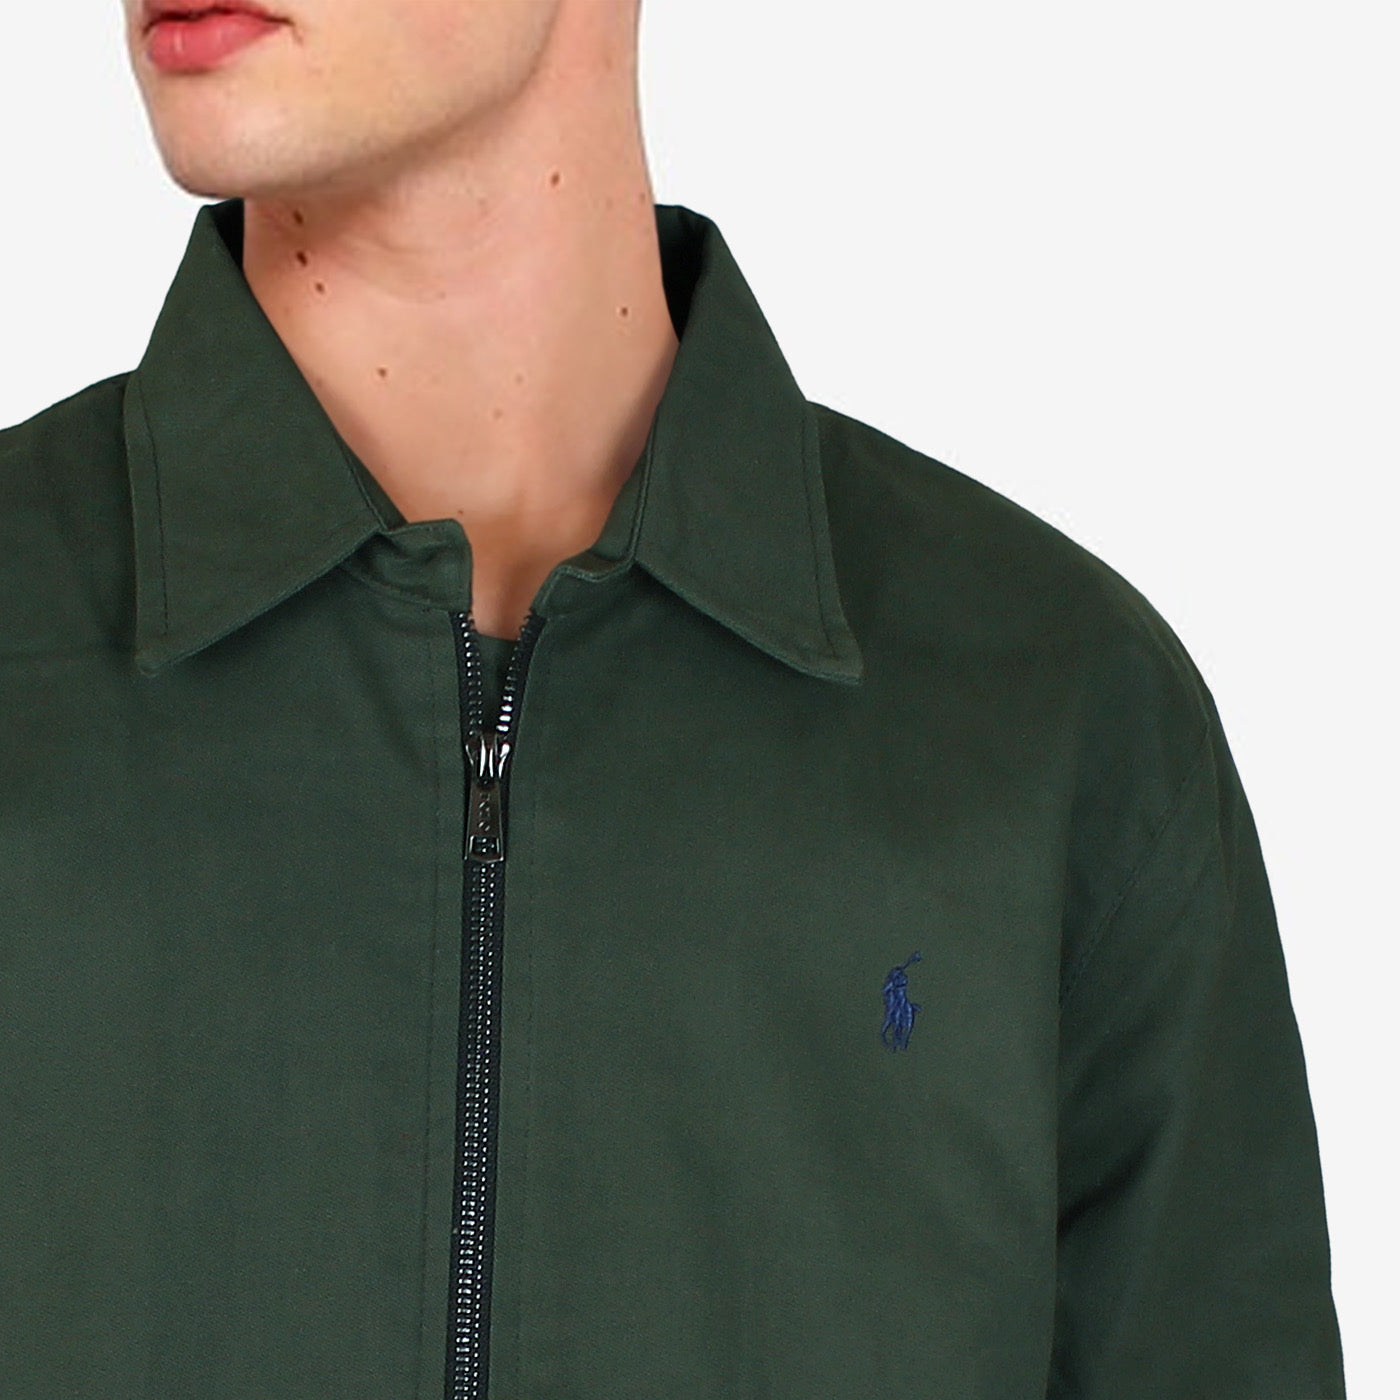 RL green cotton jacket (00279)